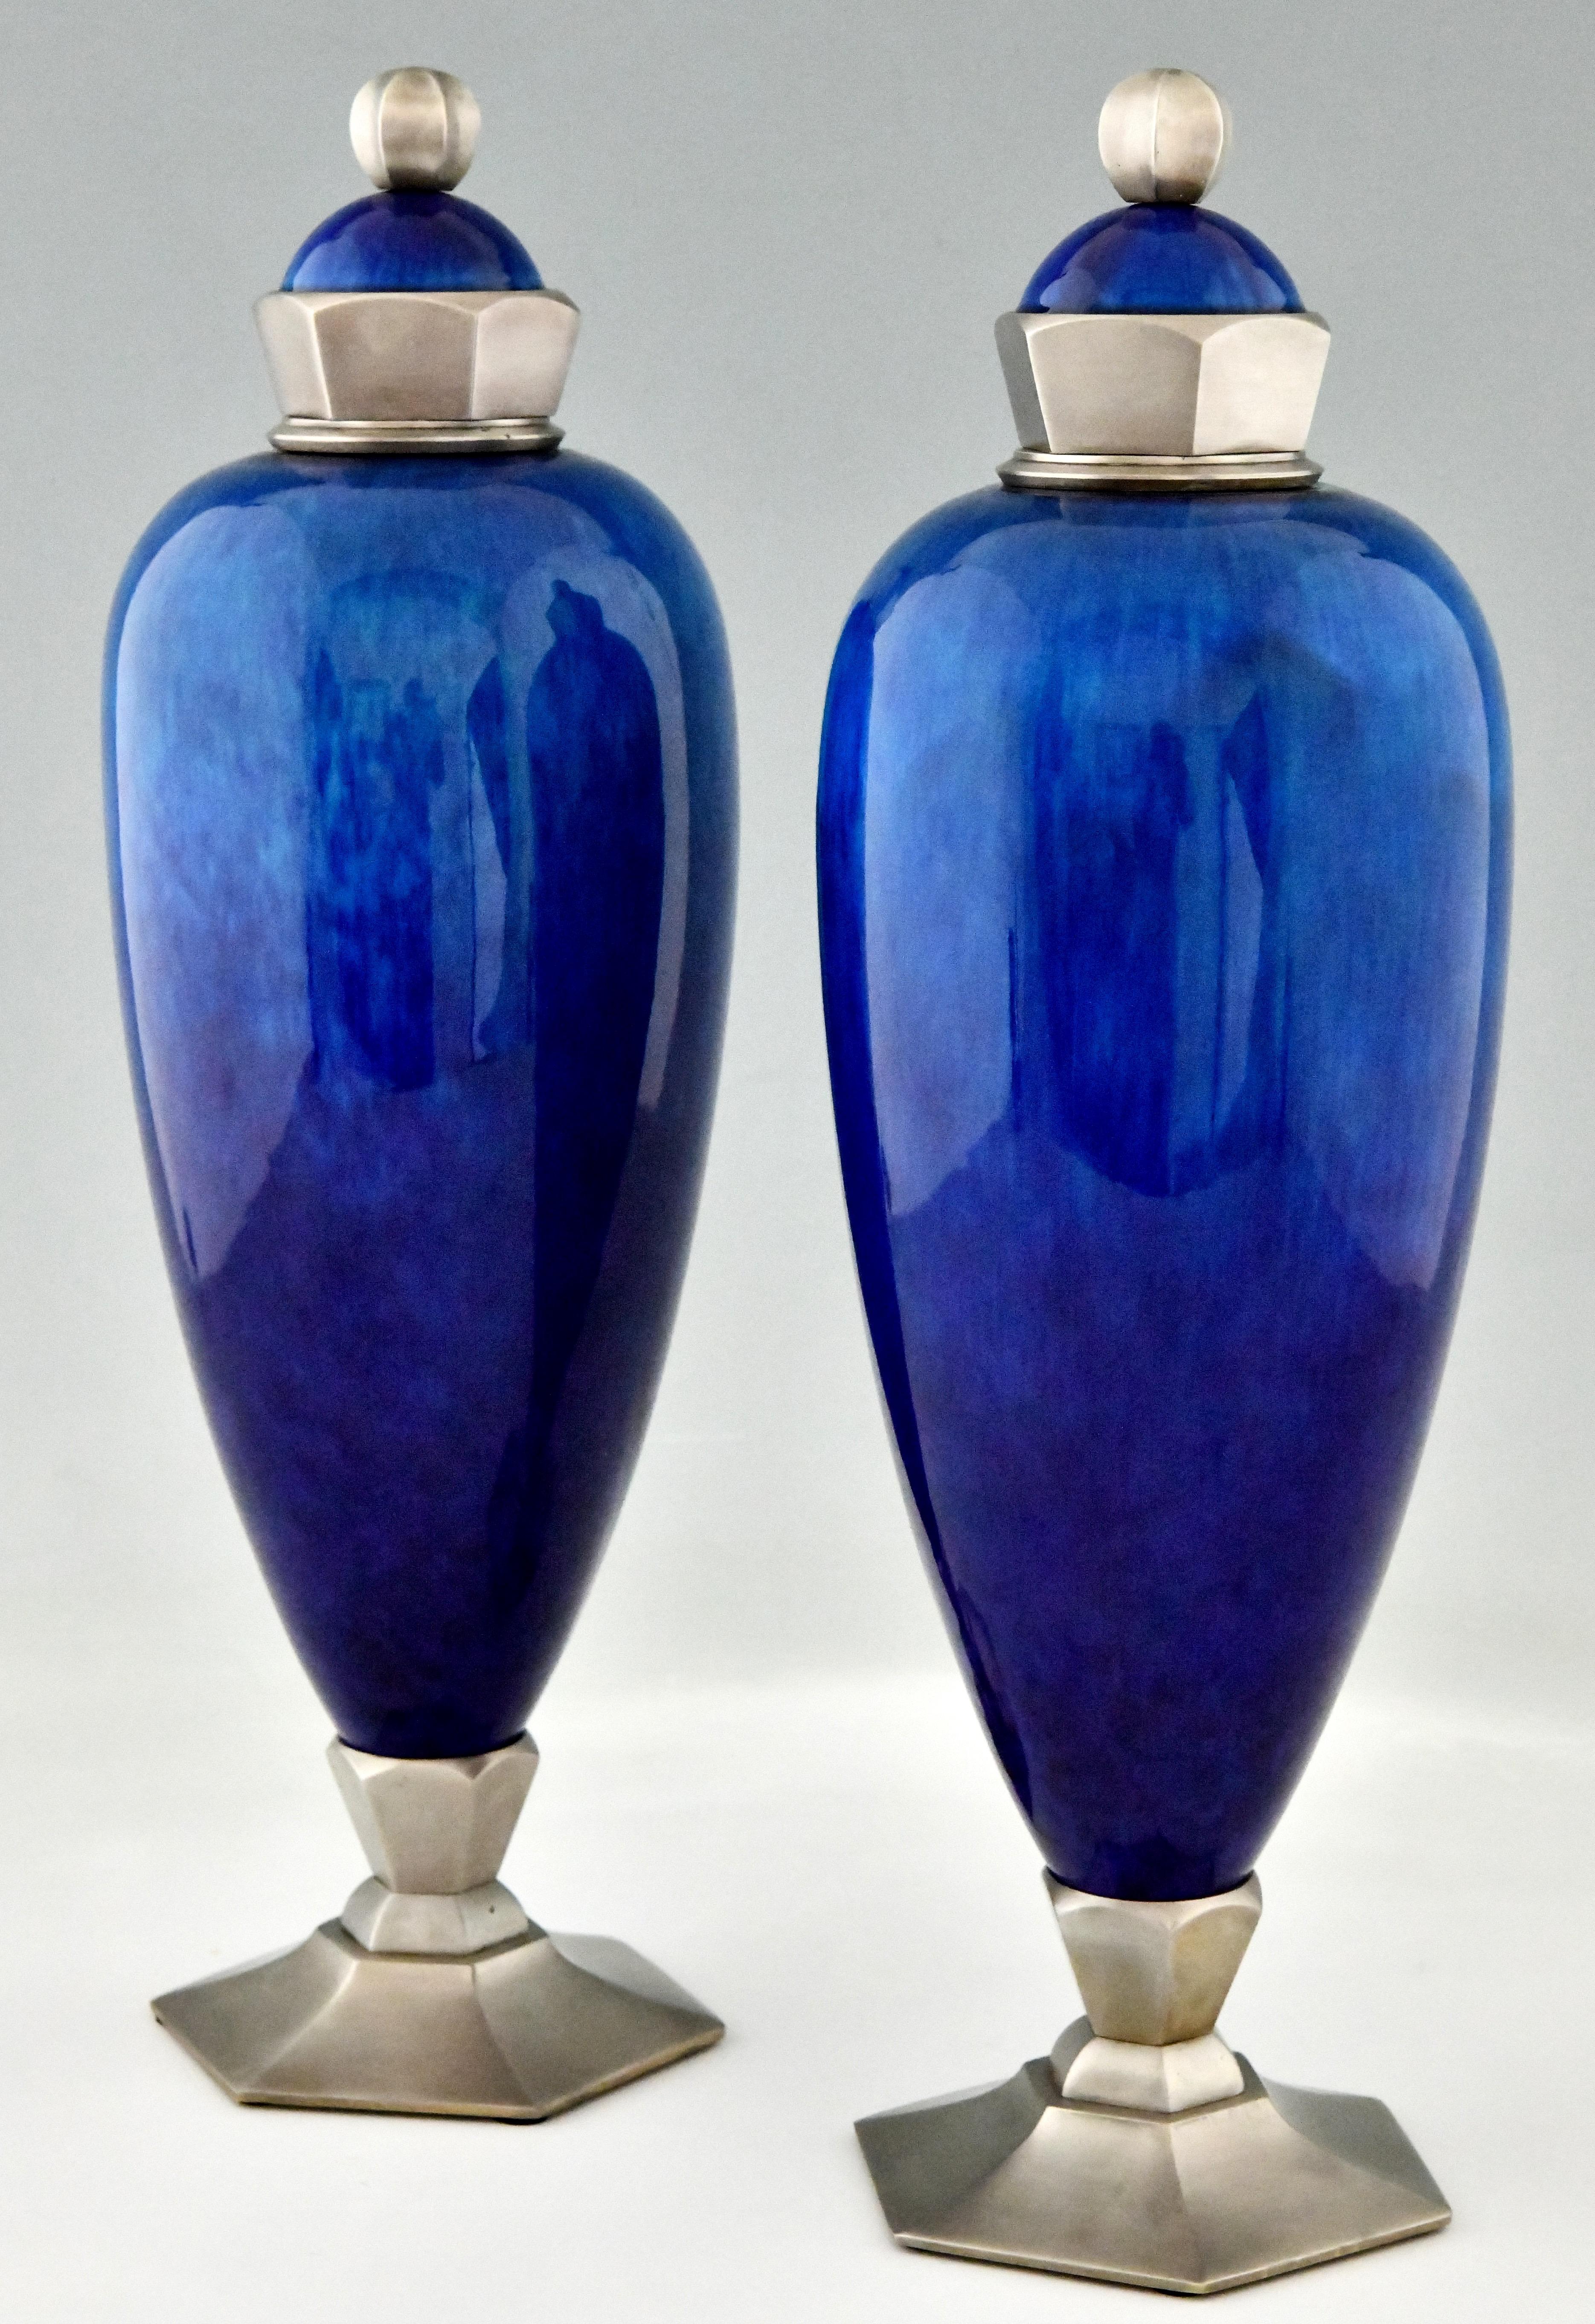 French Pair of Art Deco Blue Ceramic Vases or Urns Paul Milet for Sèvres France, 1925